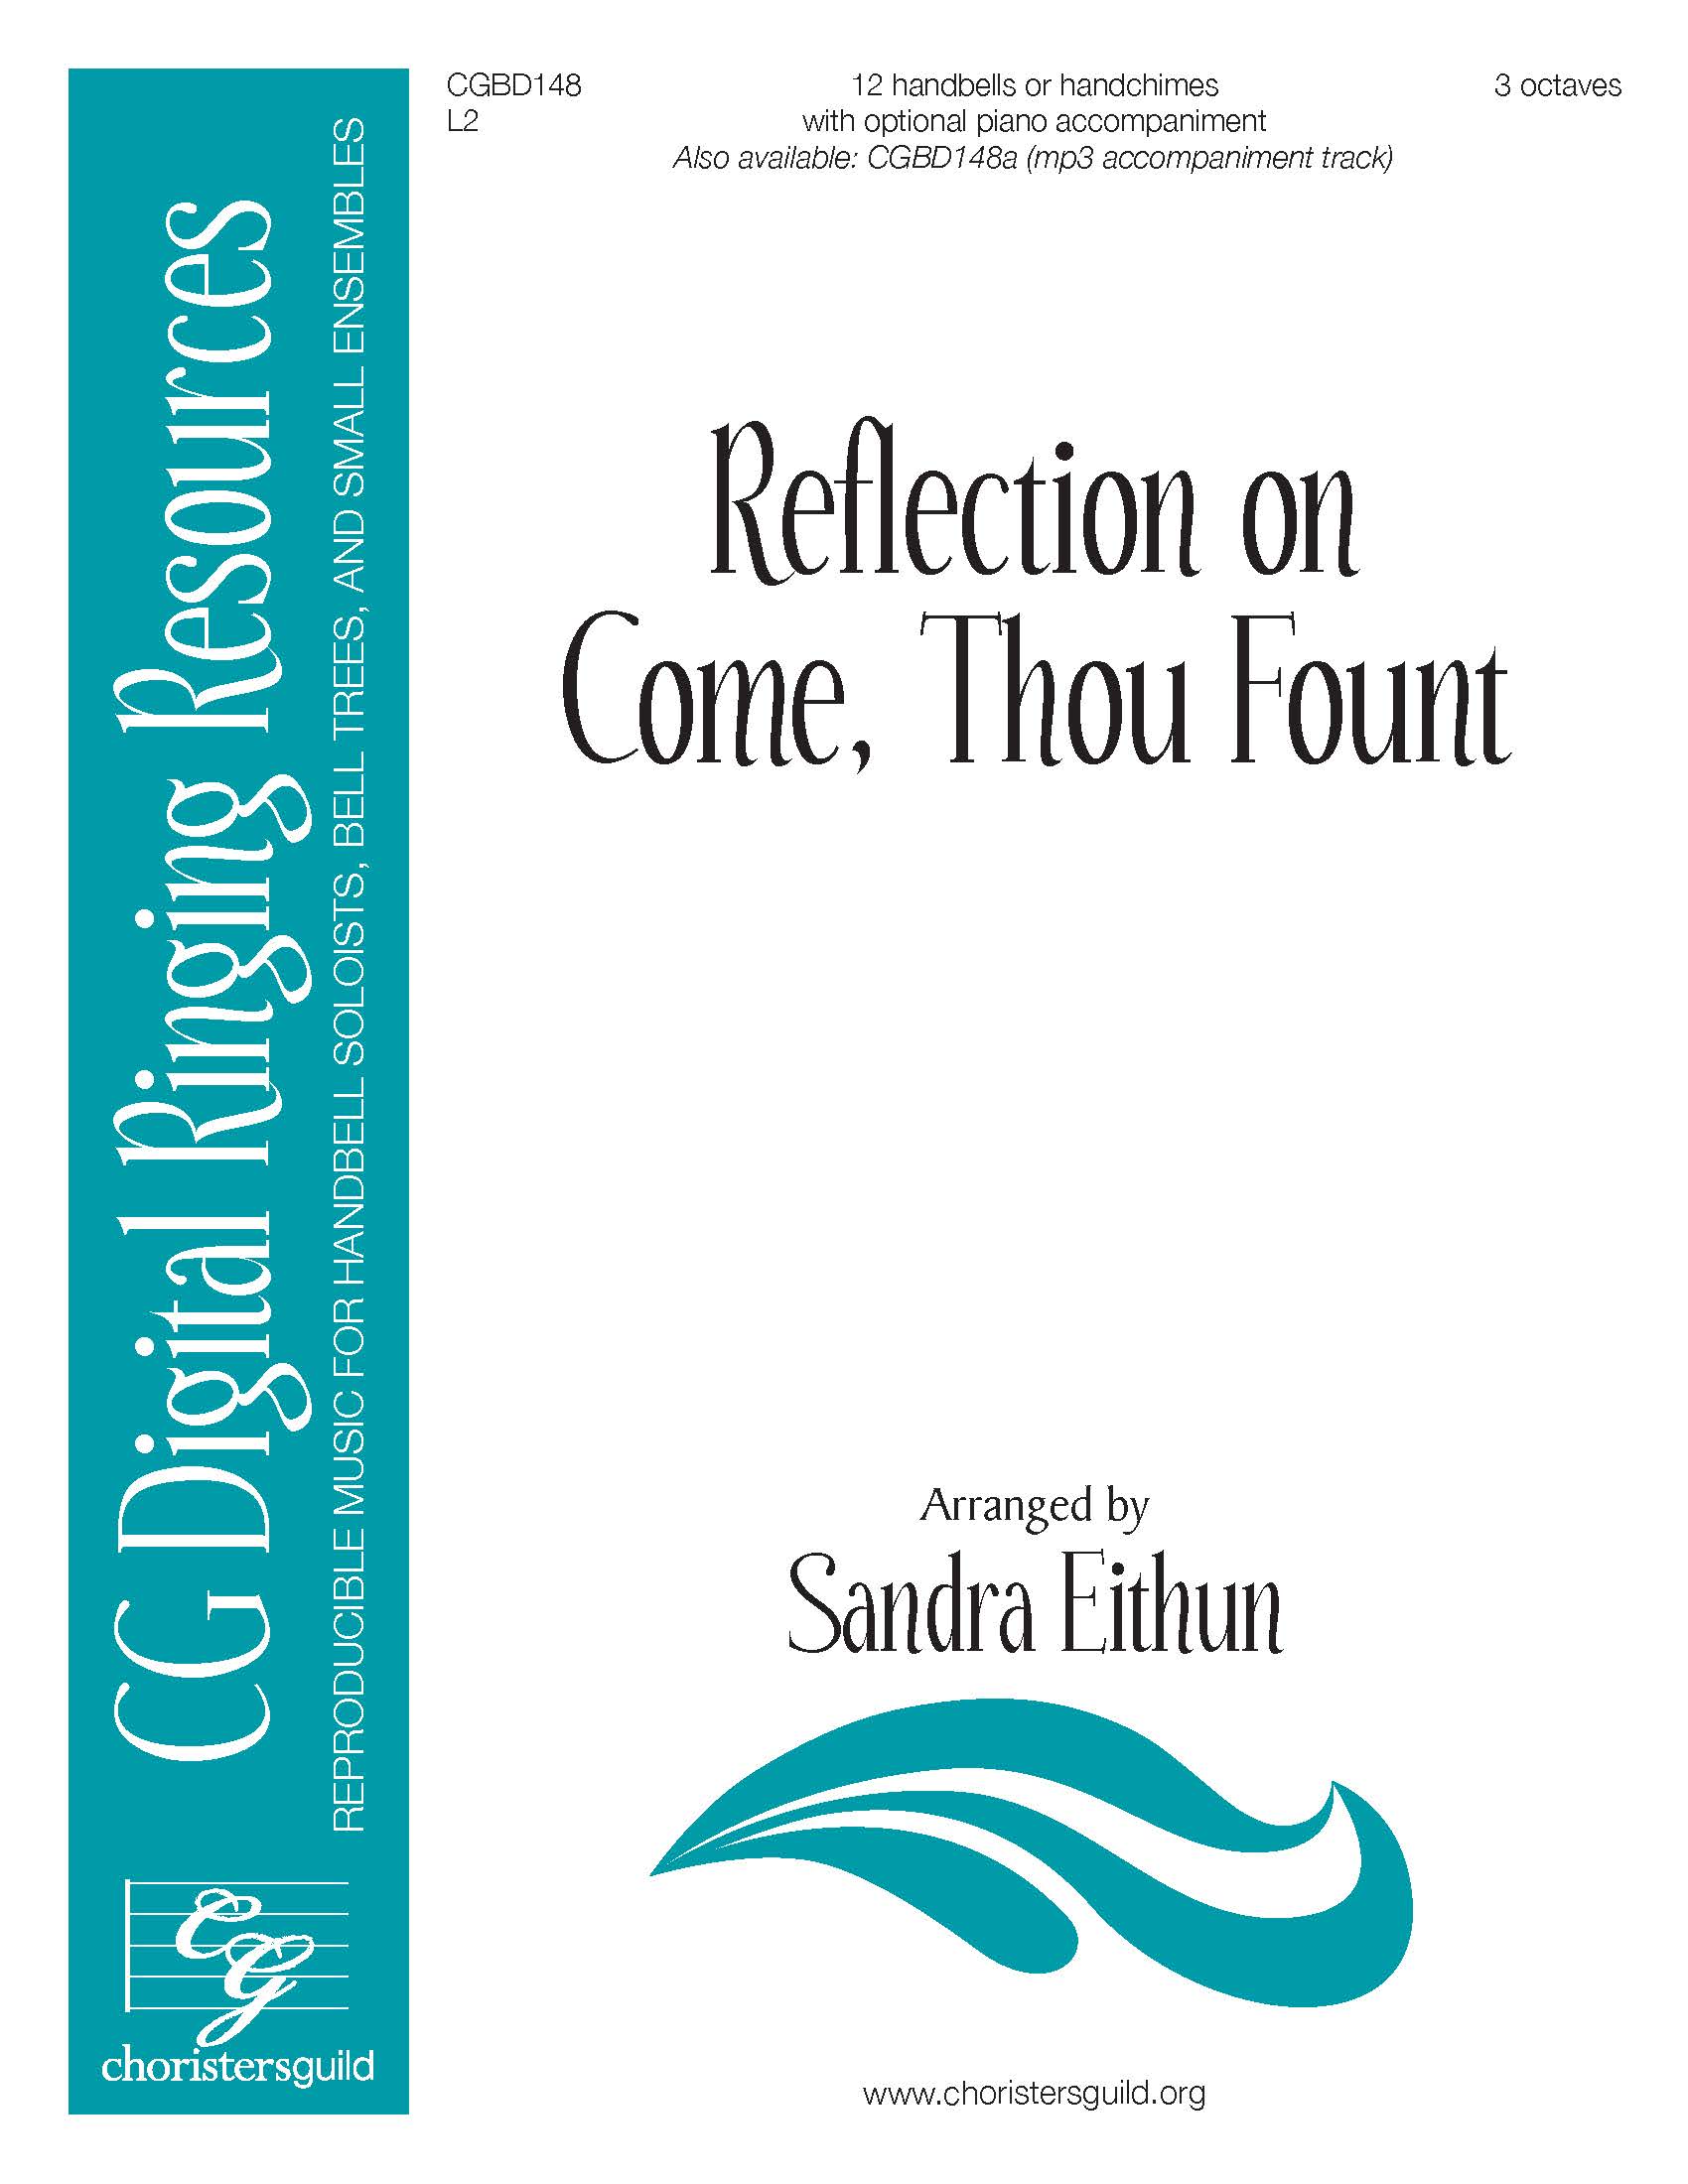 Reflection on Come Thou Fount - Digital Accompaniment Track